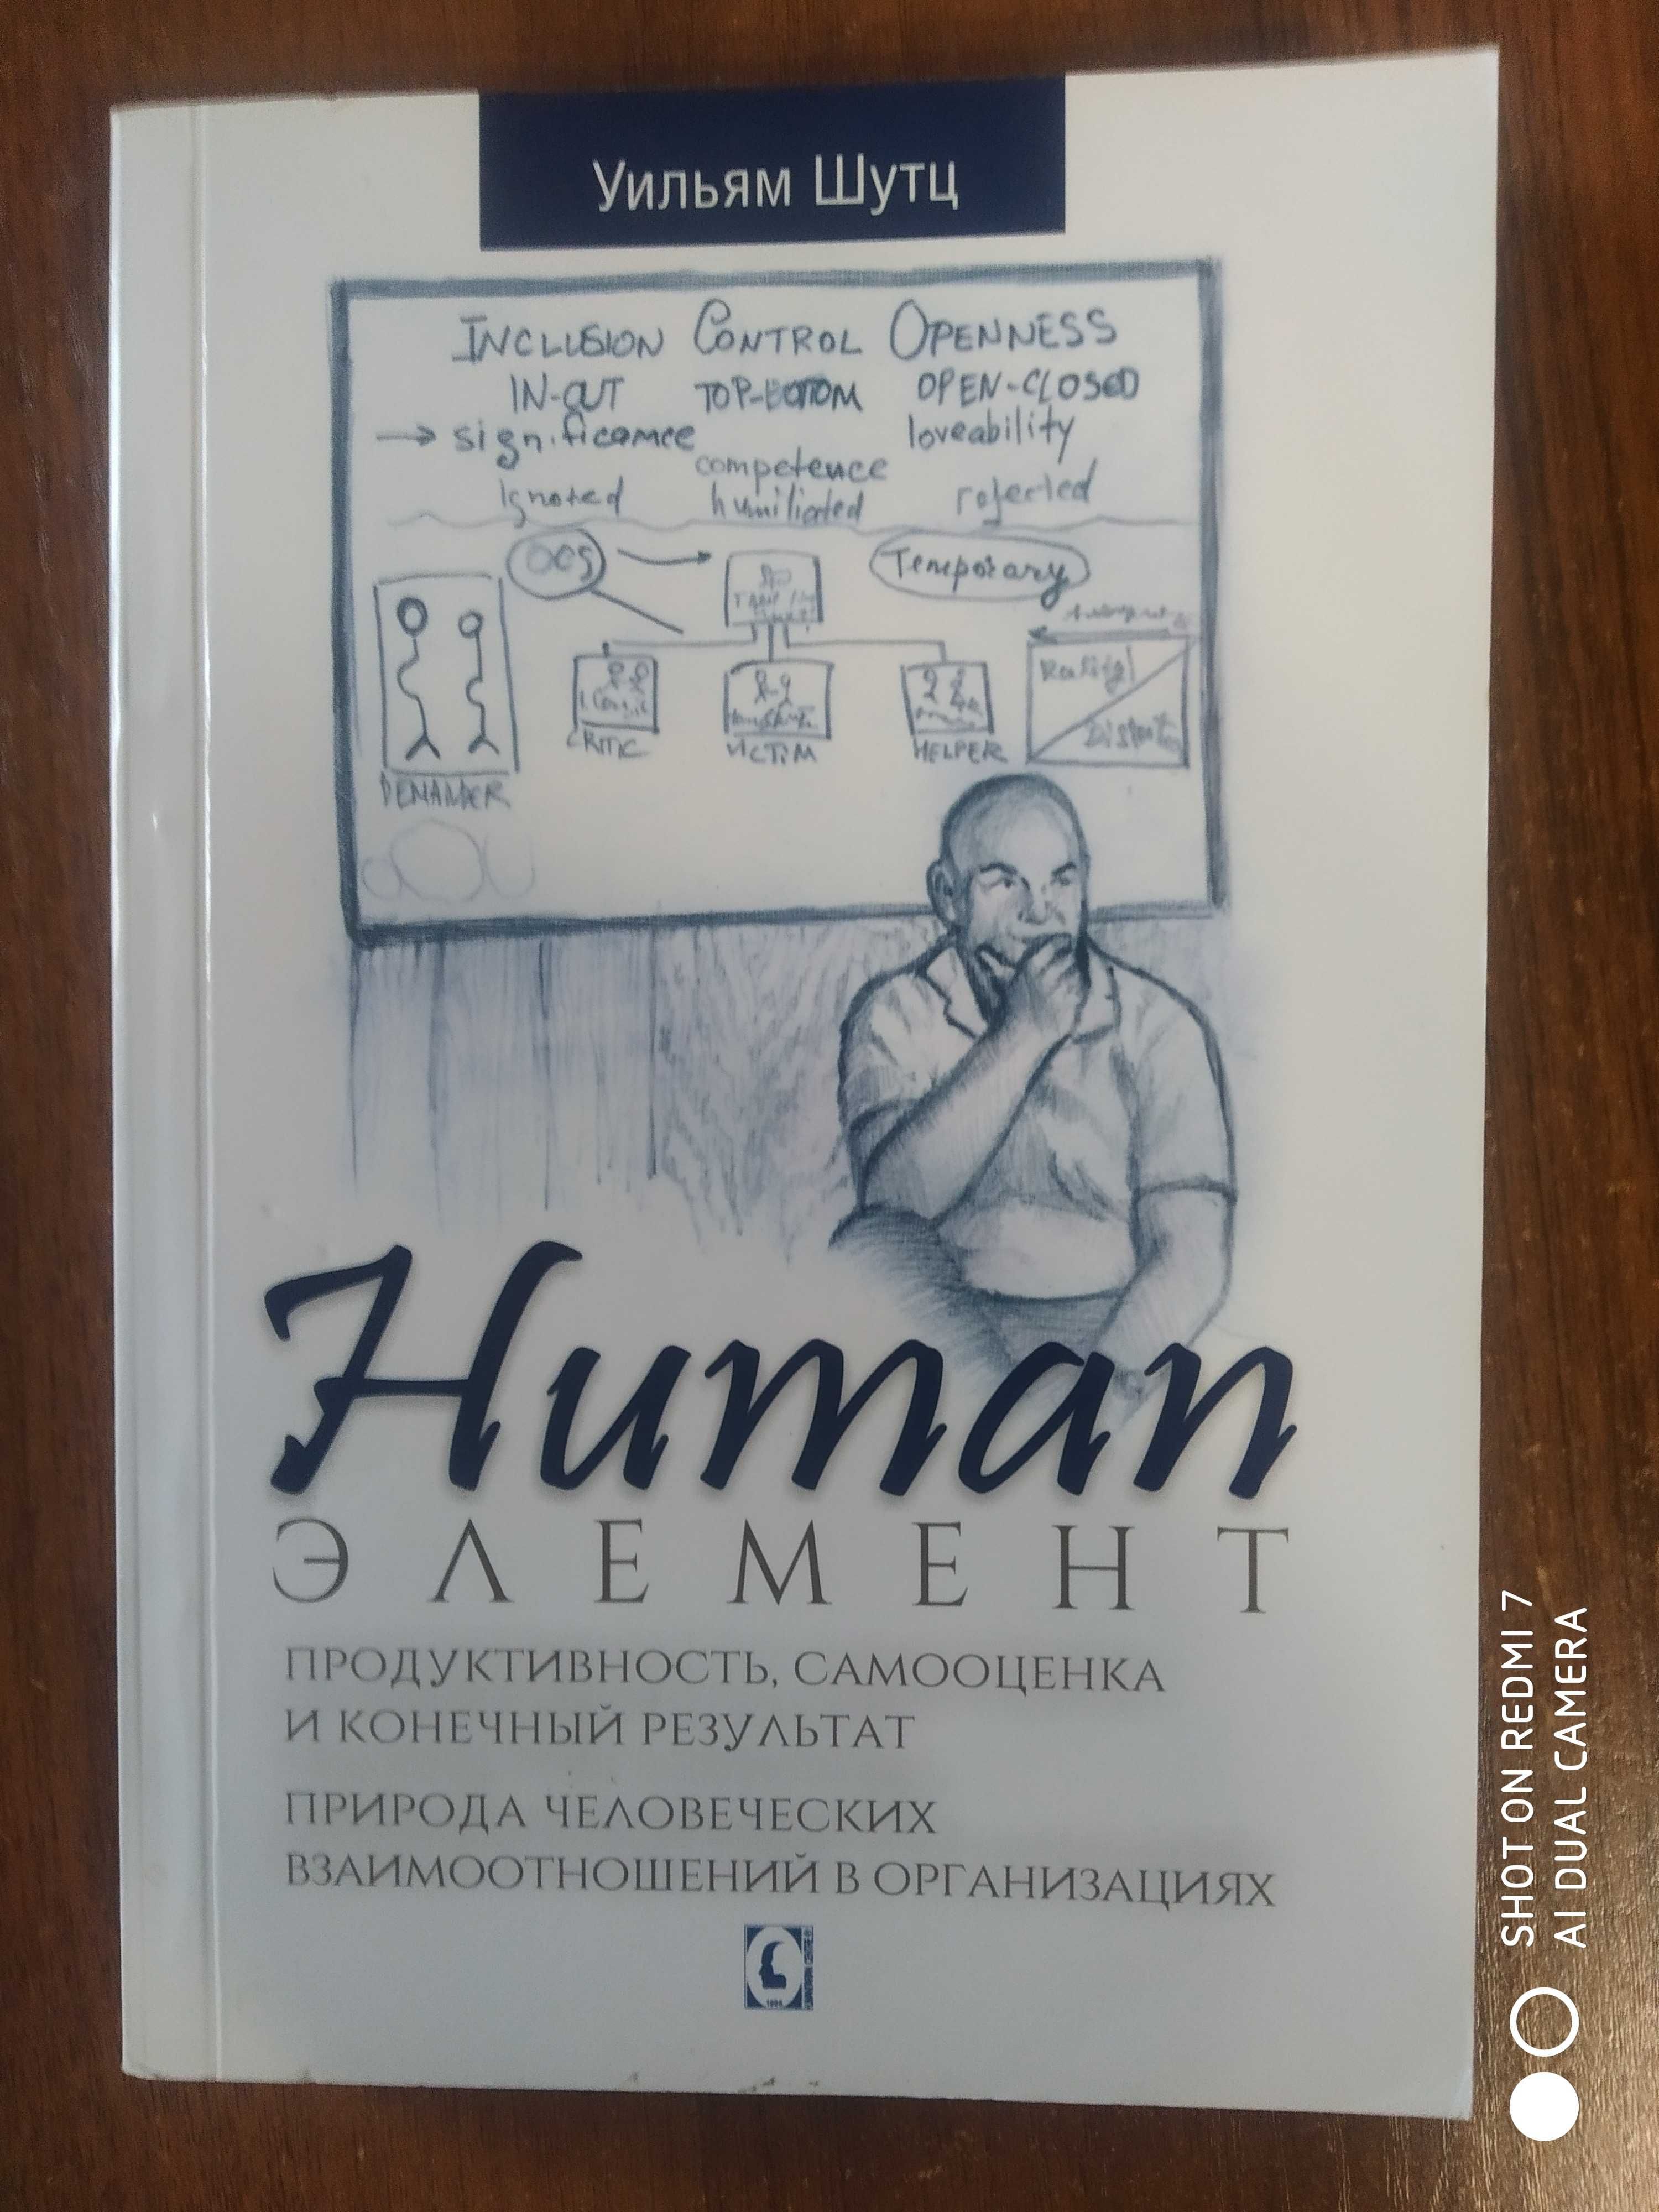 Книга Human елемент